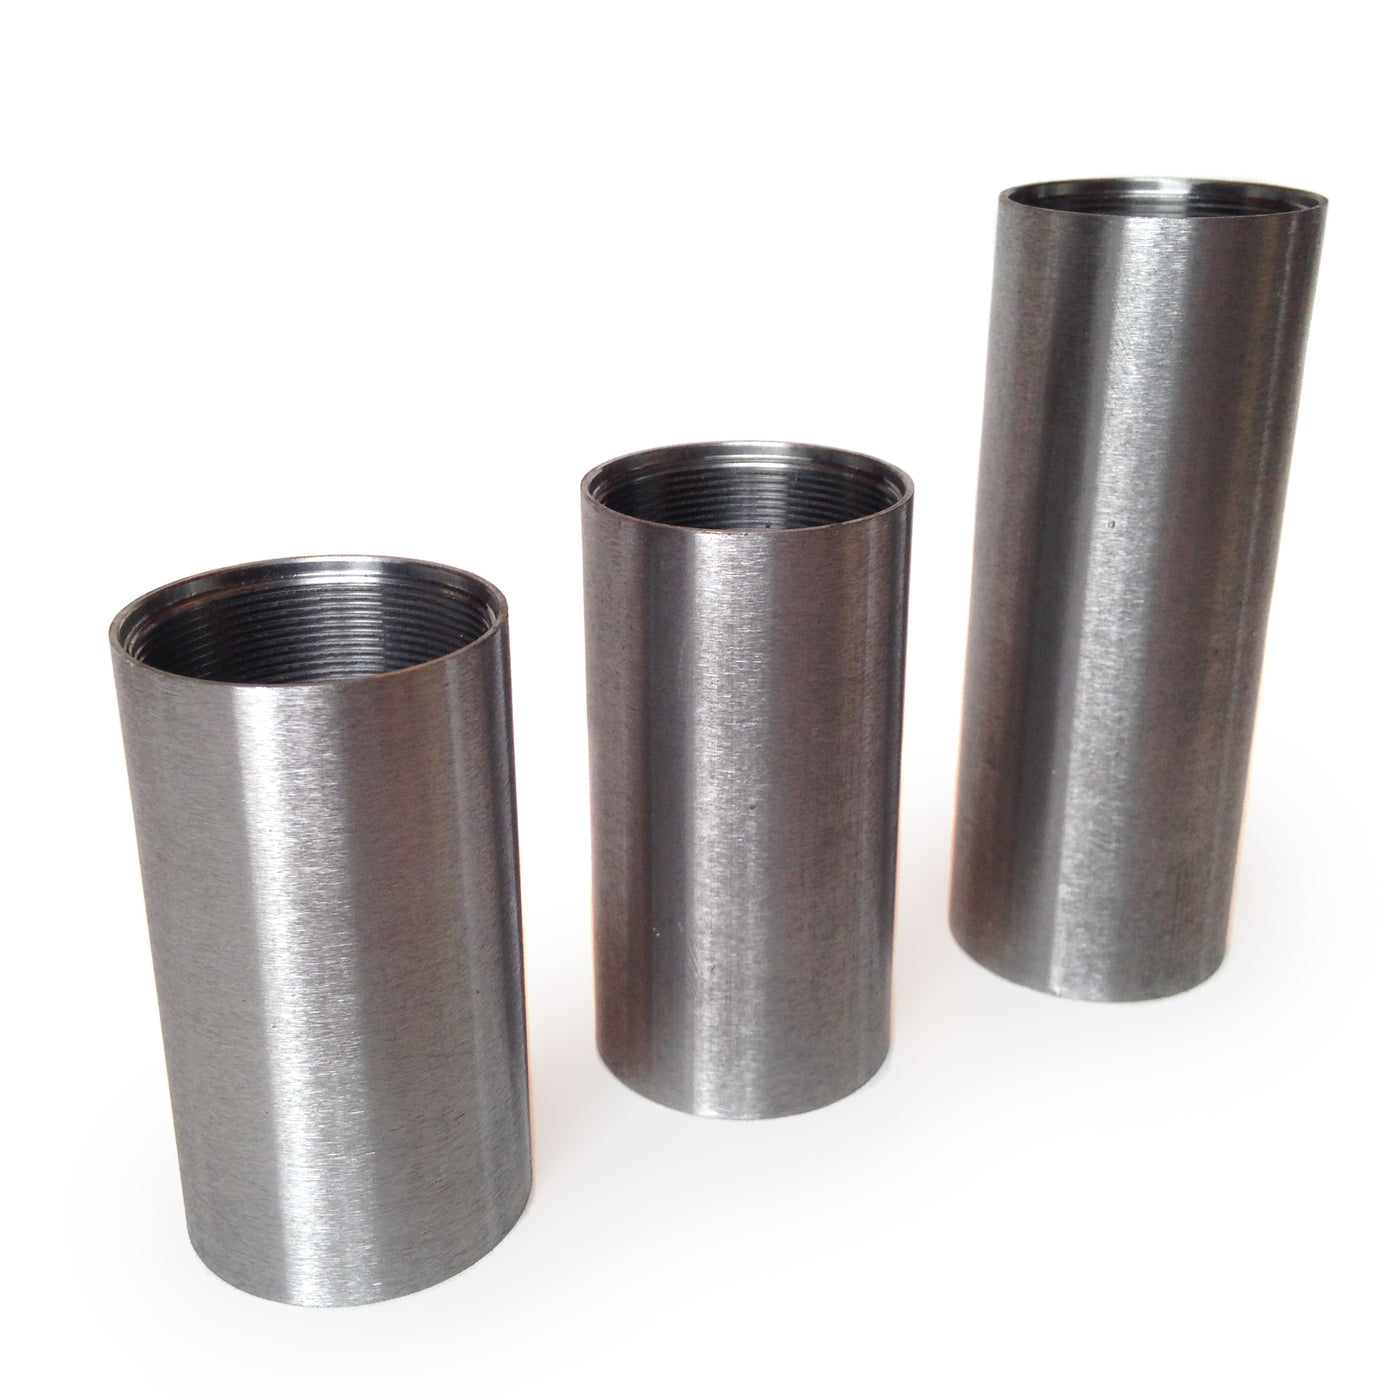 Bottom bracket shells - ISO threaded - 69mm, 74mm, 101mm - 38.1mm OD